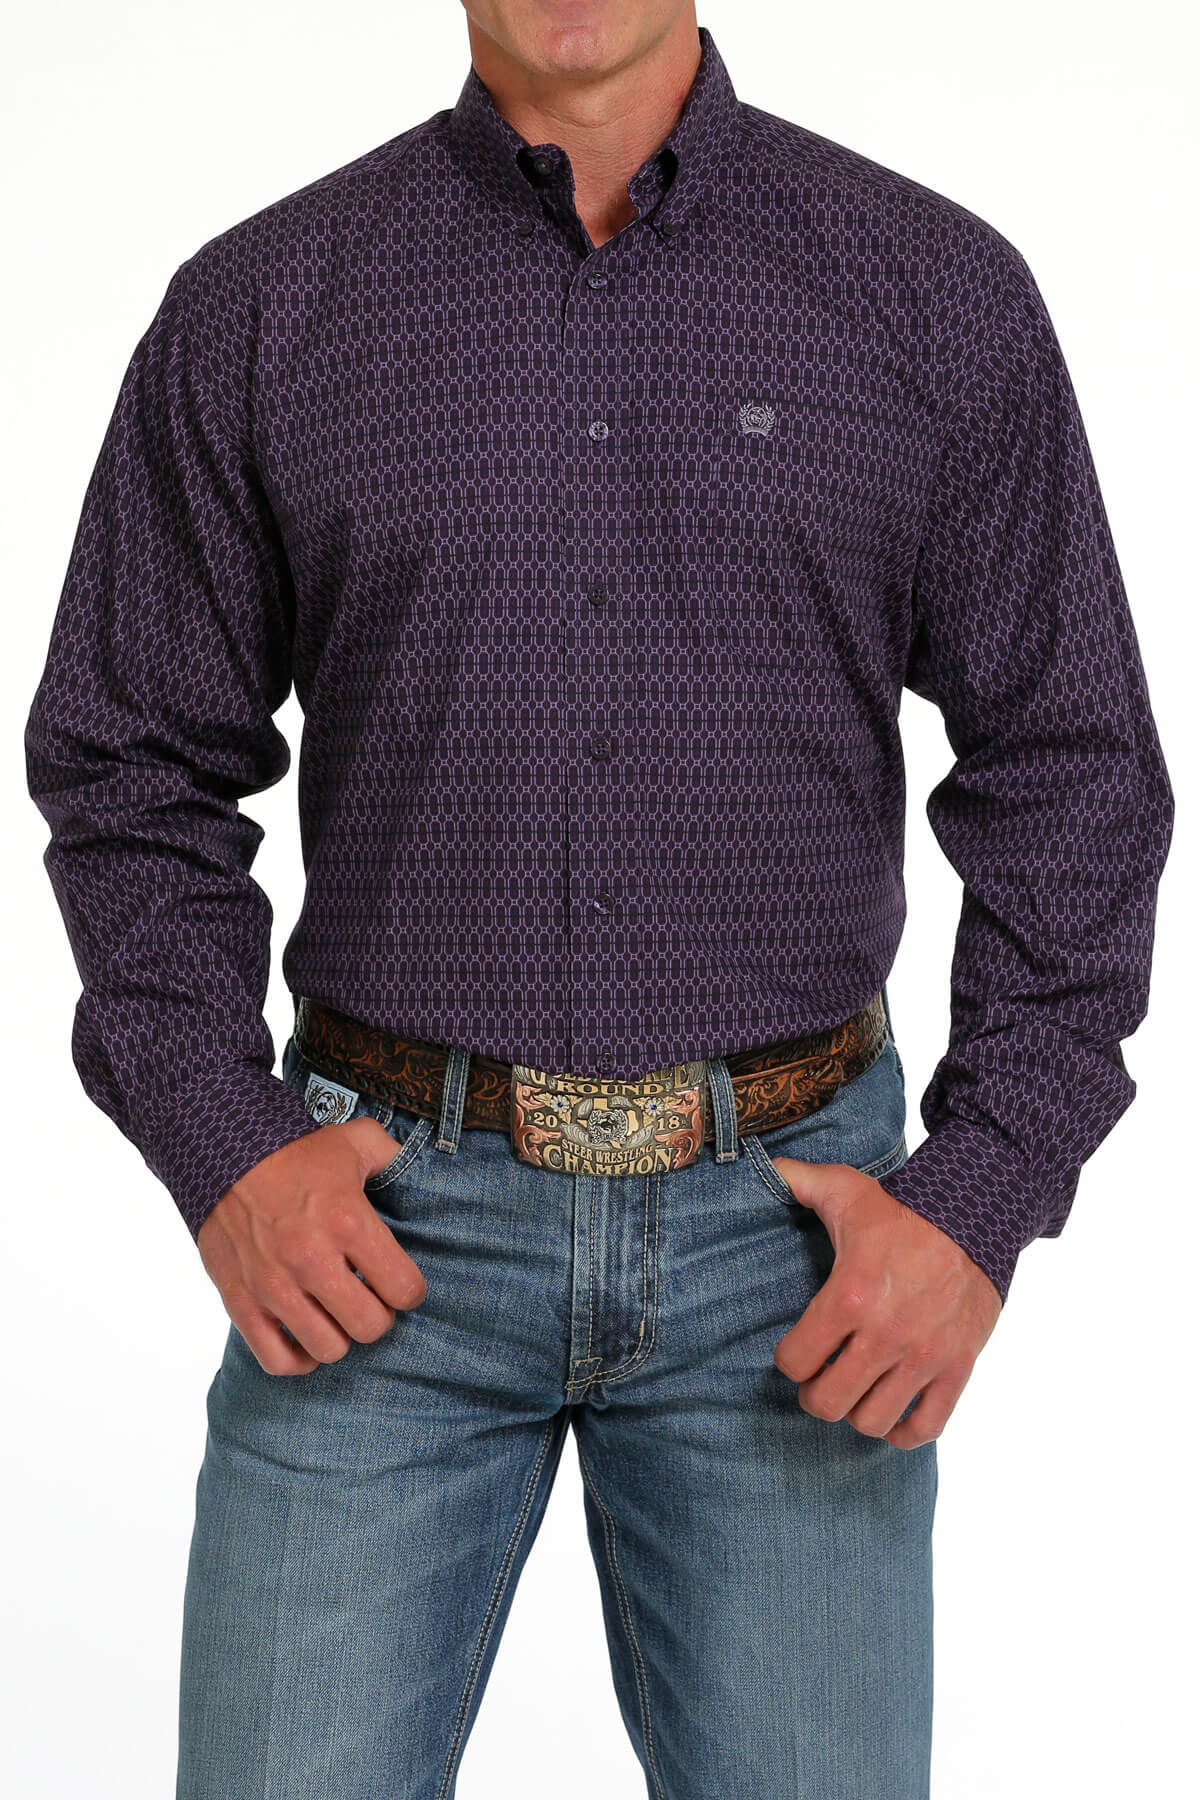 cinch geometric print shirt in purple full view